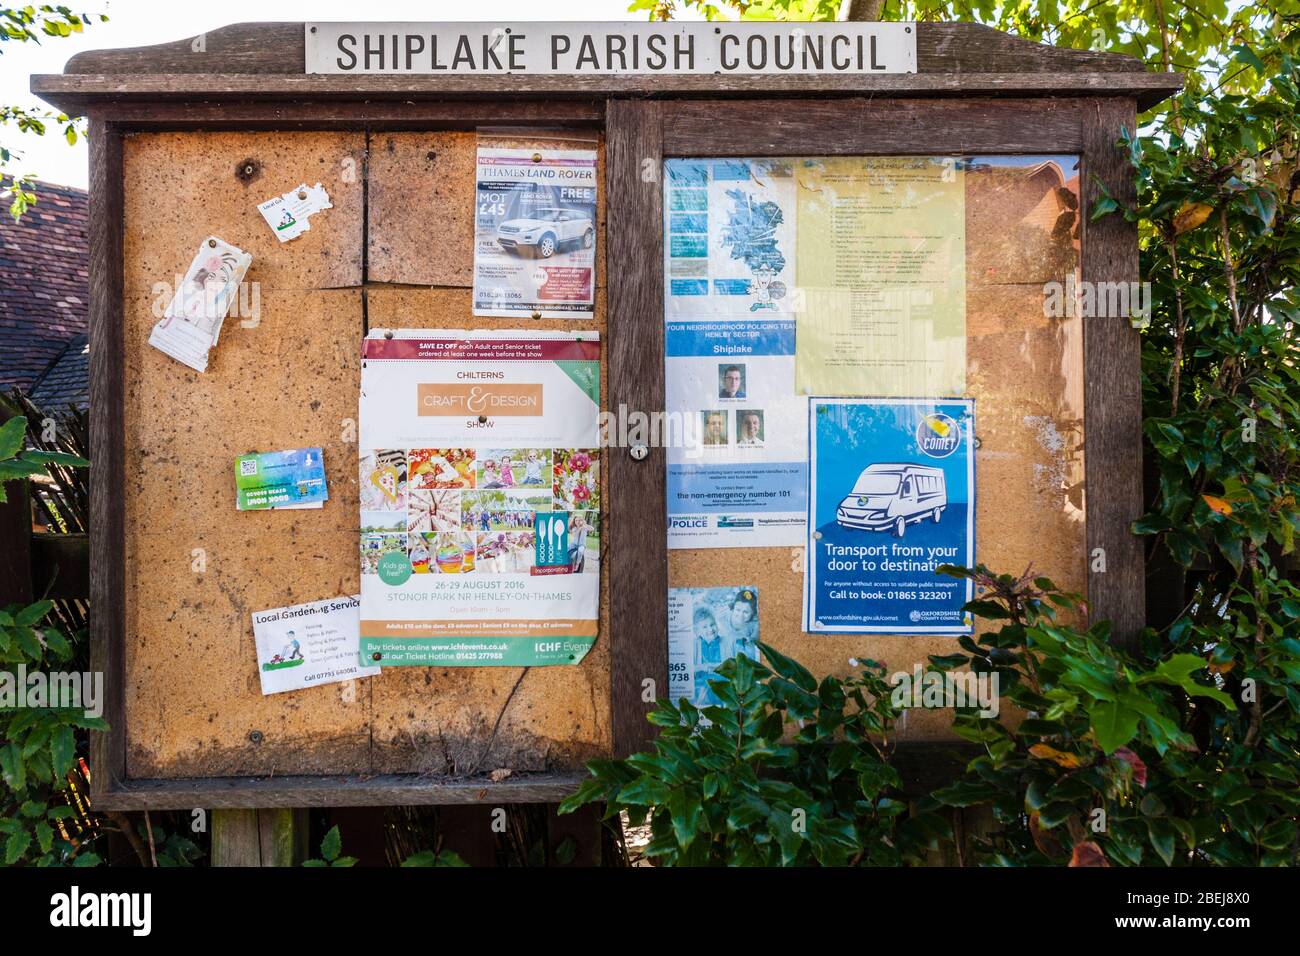 Village noticeboard, Shiplake Parish Council, Oxfordshire, England, GB, UK. Stock Photo